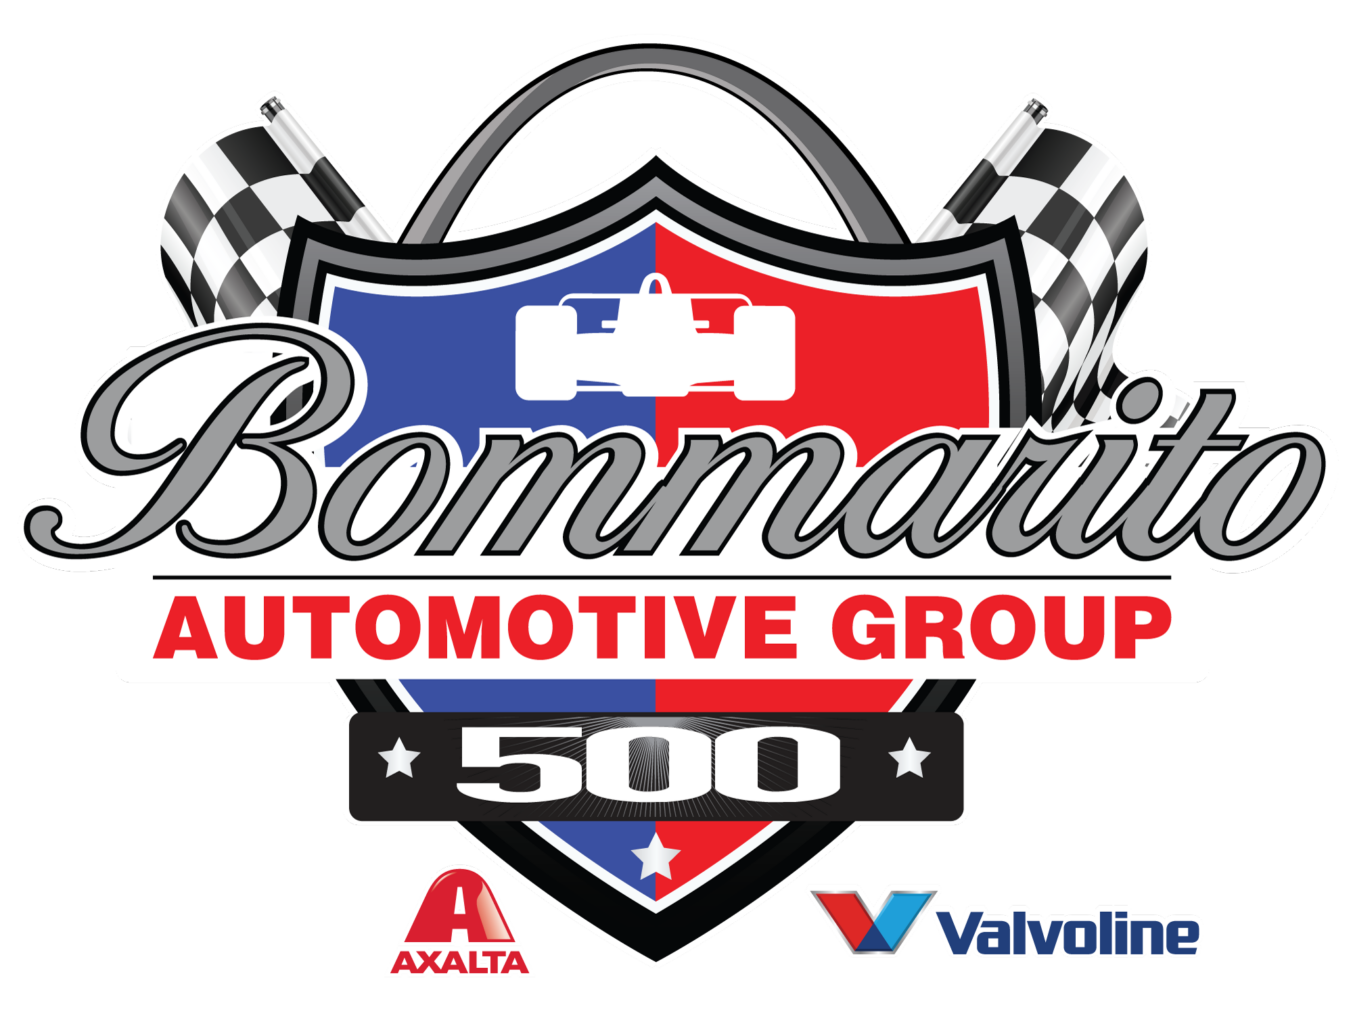 Bommarito 500 IndyCar Logo